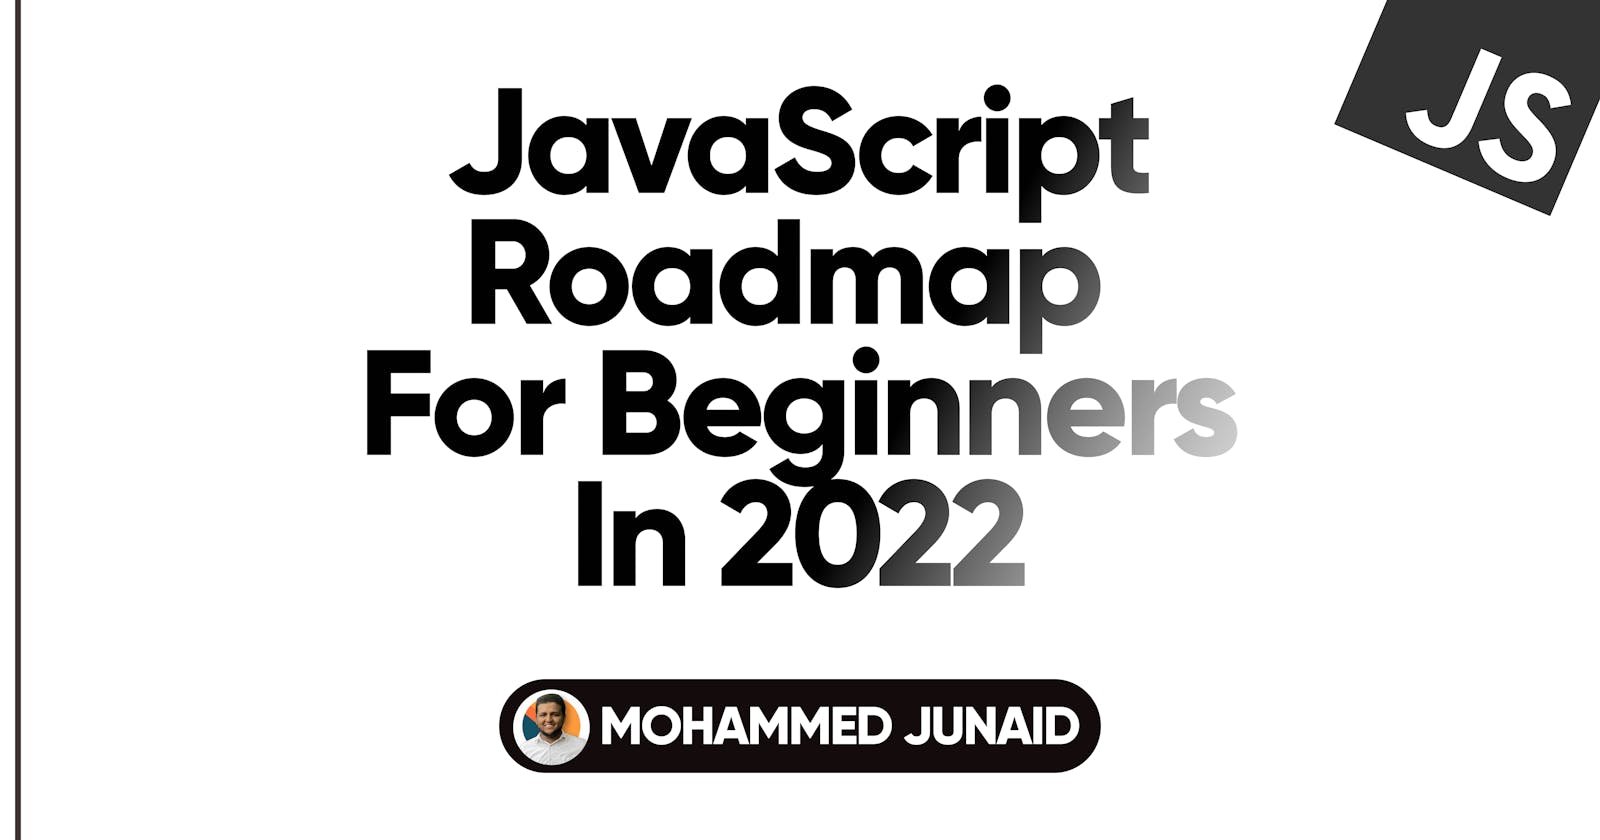 Javascript Roadmap for Beginners in 2022.